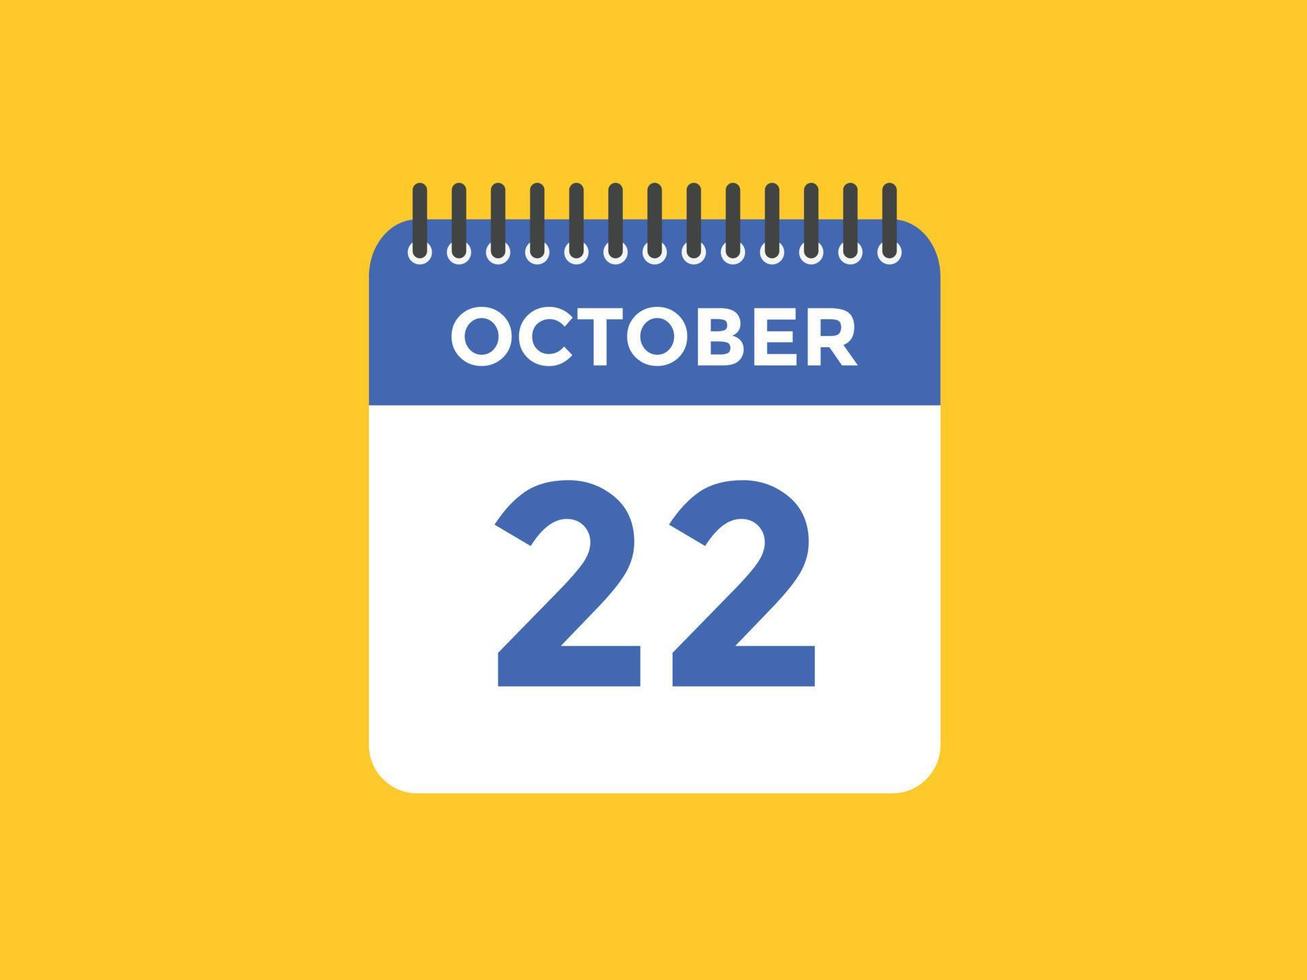 october 22 calendar reminder. 22th october daily calendar icon template. Calendar 22th october icon Design template. Vector illustration